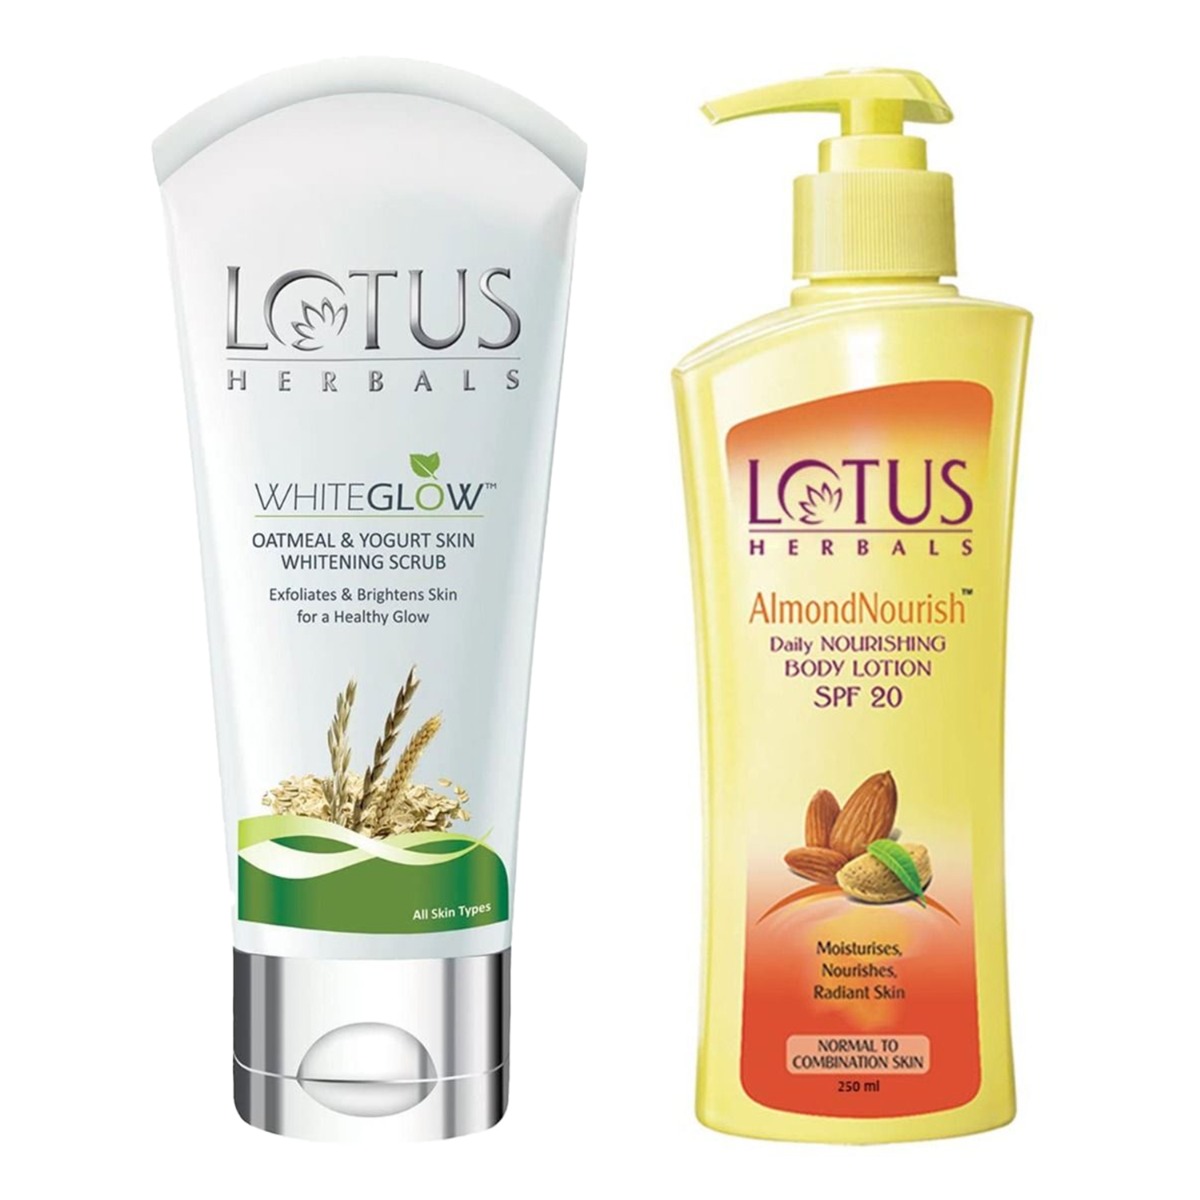 Lotus Herbals AlmondNourish Daily Nourishing Body Lotion SPF 20, 250ml & White Glow Oatmeal And Yogurt Skin Whitening Scrub, 100gm